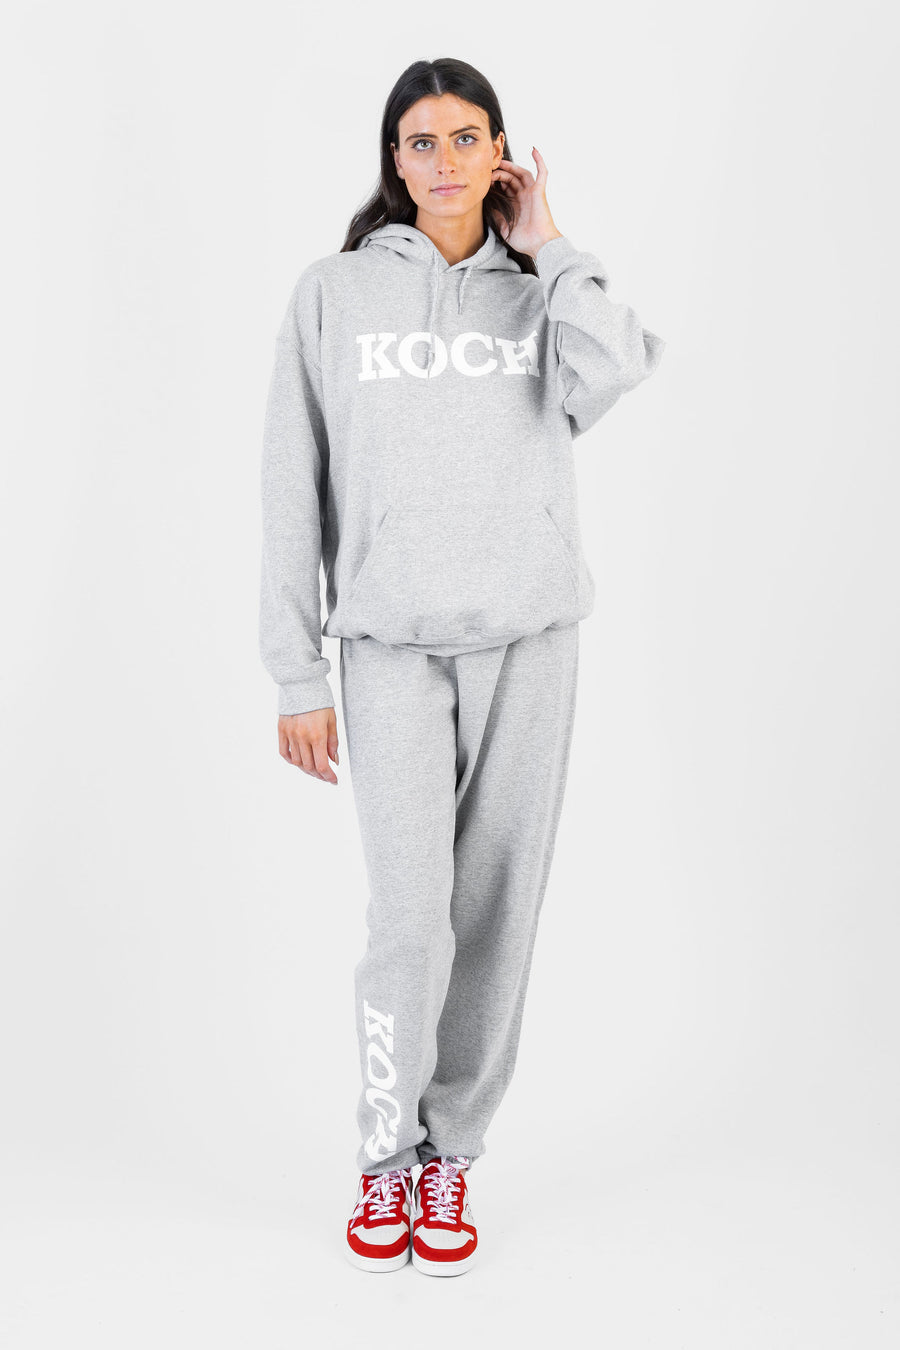 KOCH Sweatsuit Grey *Limited*Edition*